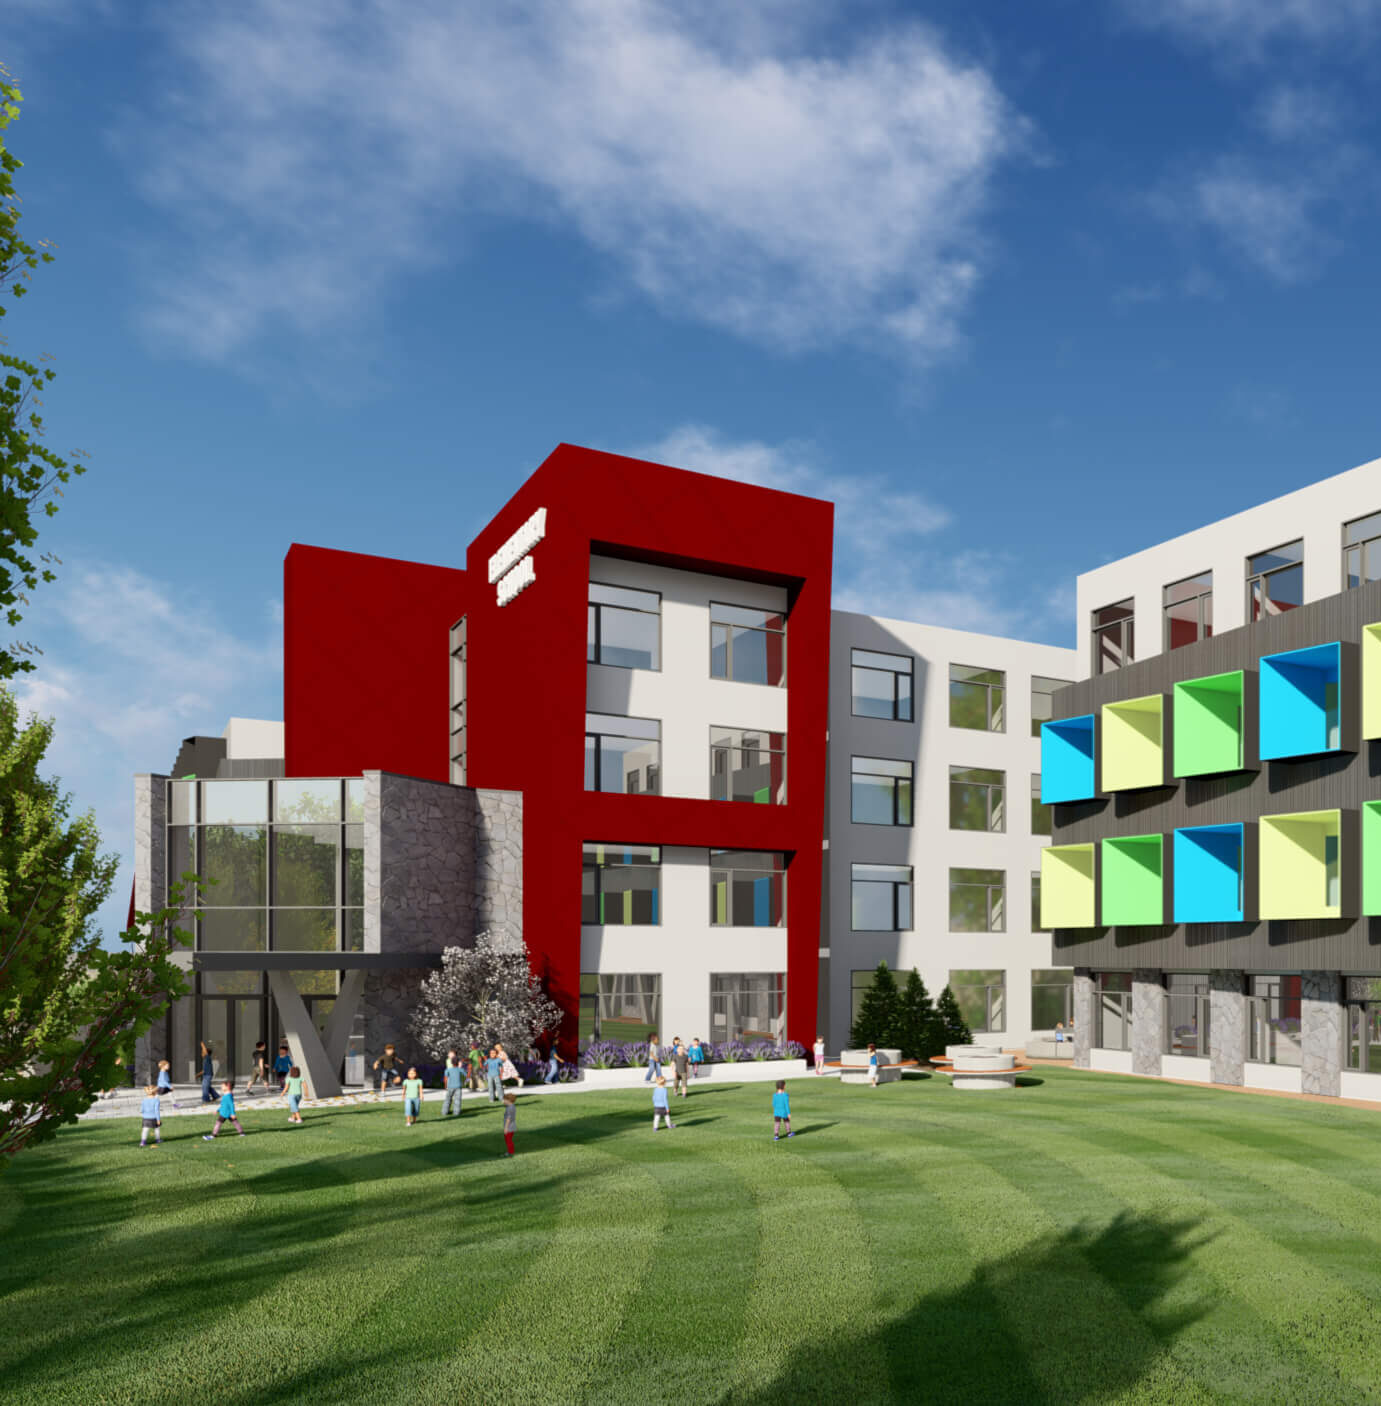 “Gurdwara Complex” development is a civic school complex project in Surrey. Design by Group 161 | DF Architecture.